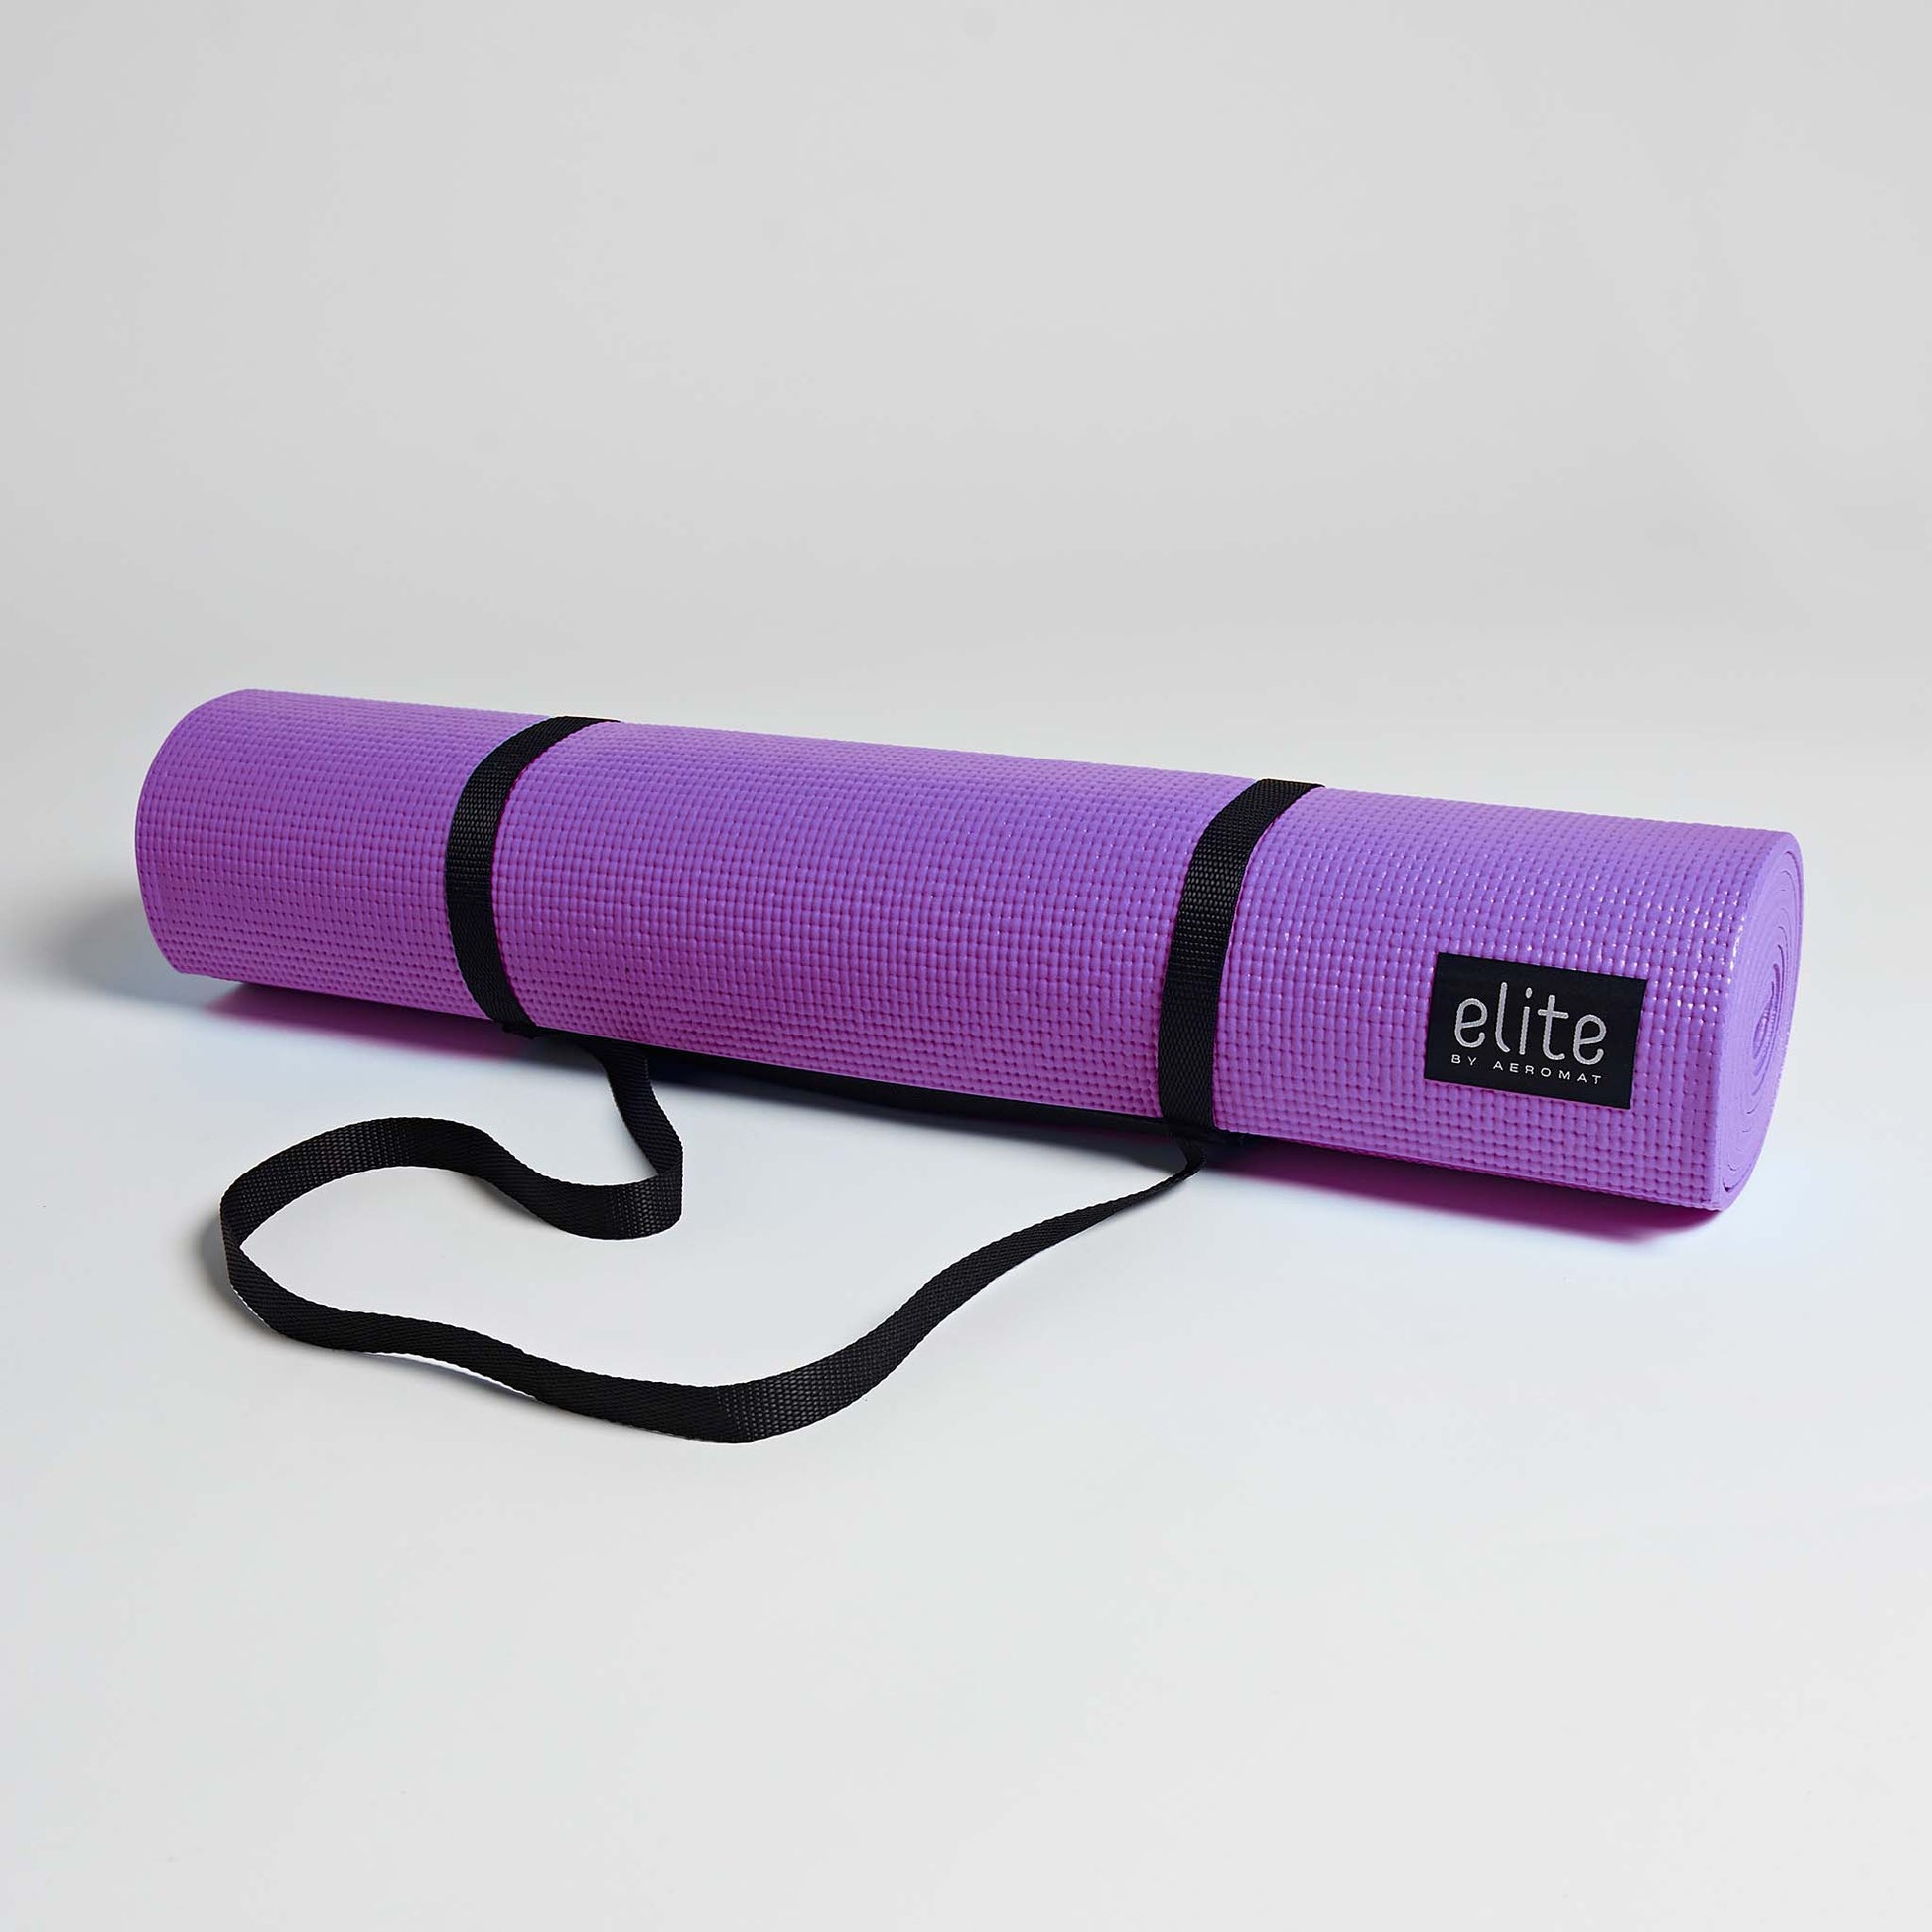 Sea. Earth. Air Ultimate Grip 4mm Yoga Mat - Lavender - HOLDEReight Premium Yoga  Mats